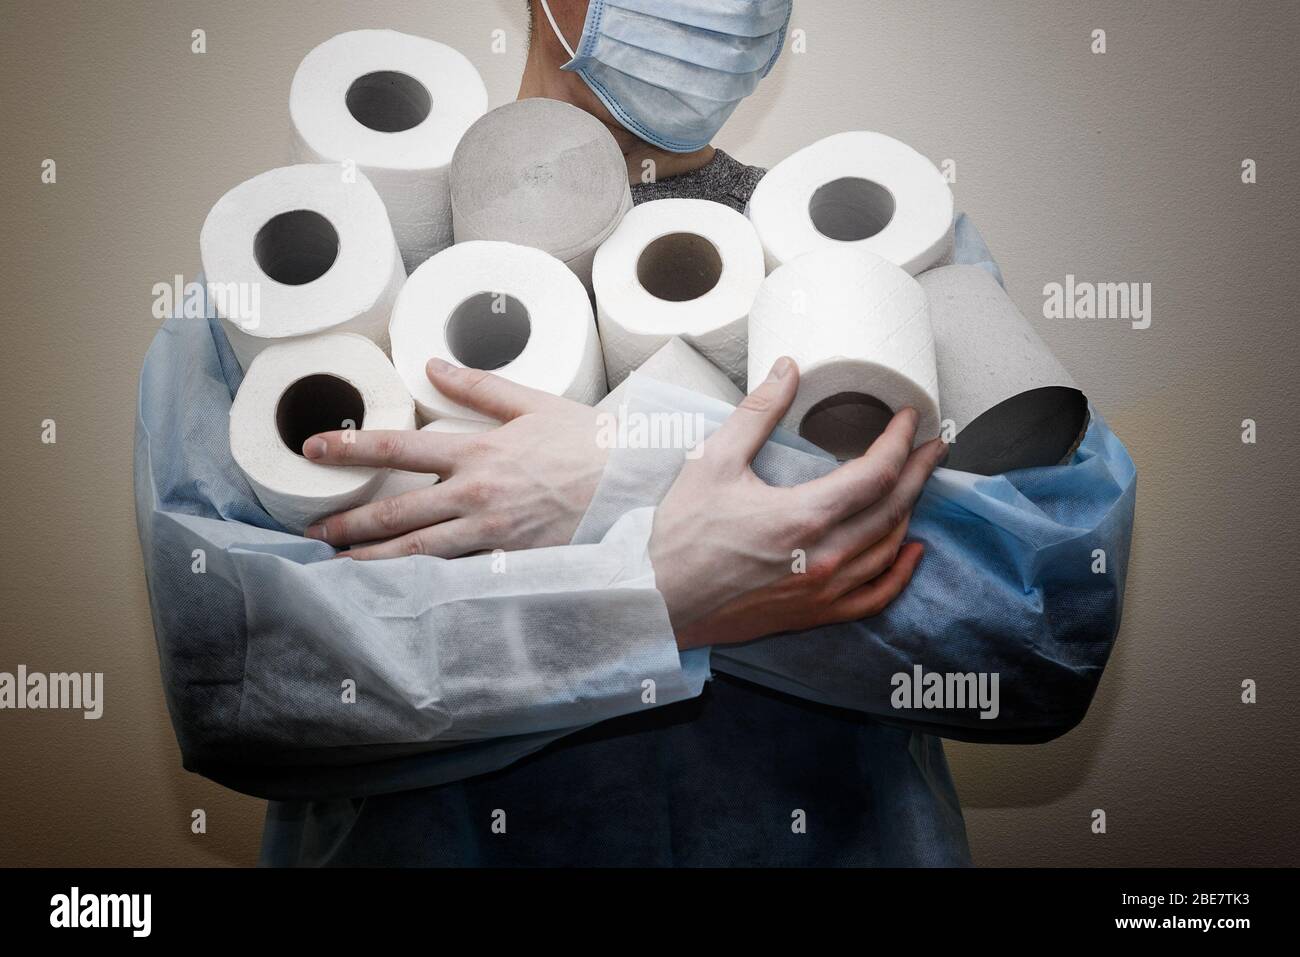 Toilet paper shortage amid coronavirus pandemic. COVID-19 - unprecedented panic Stock Photo